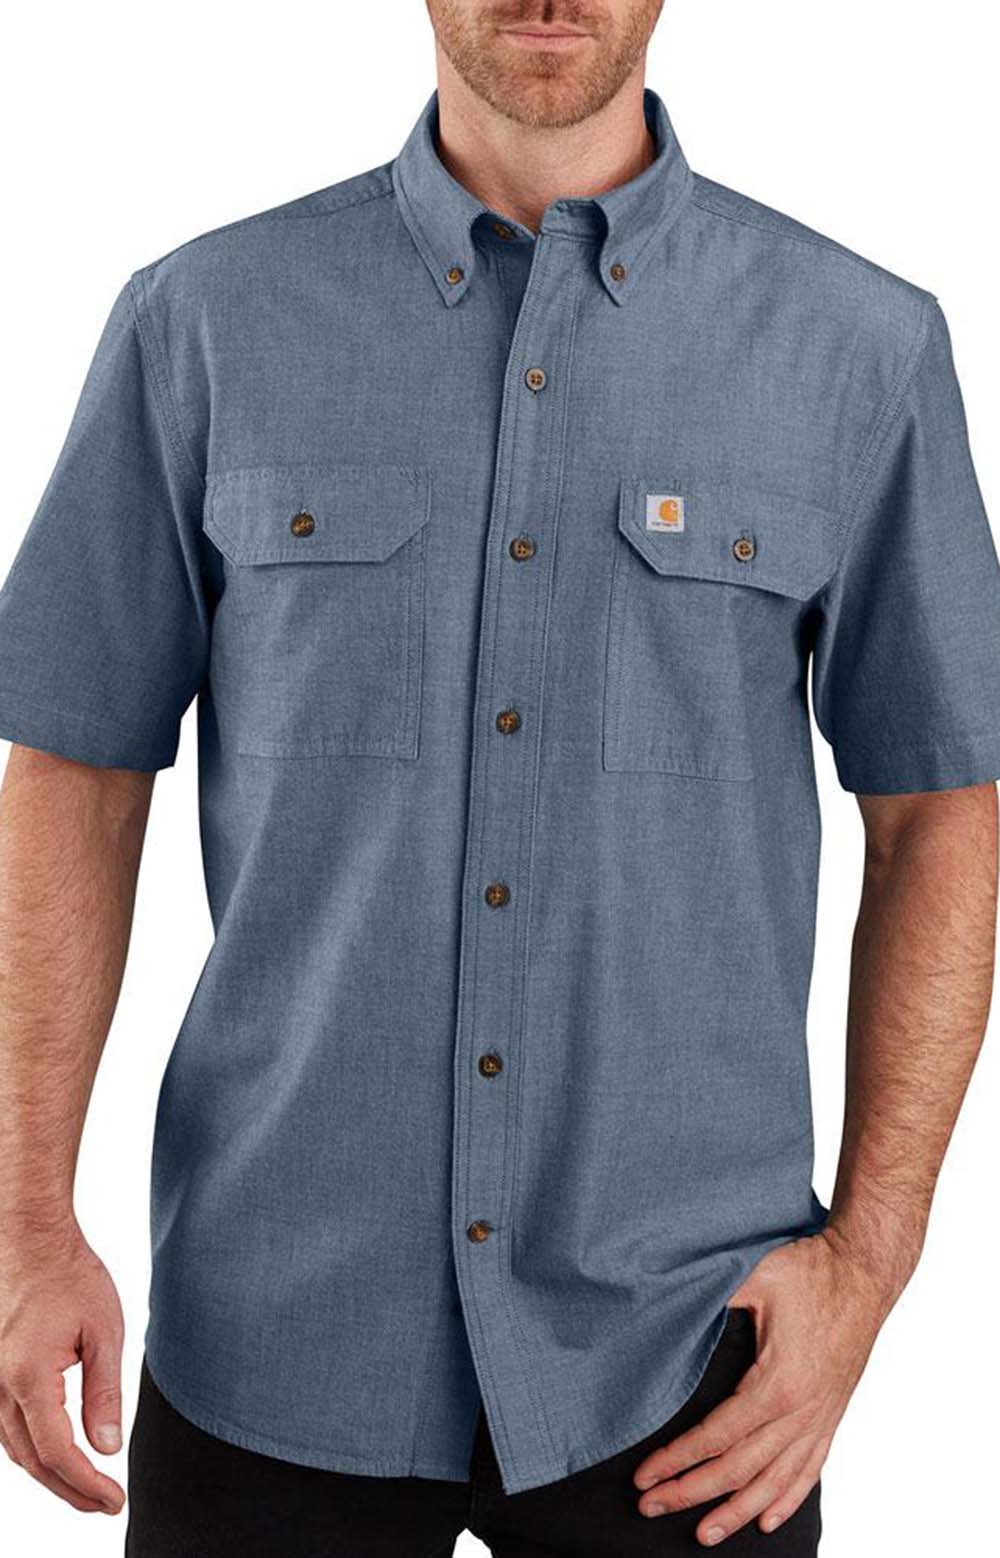 (104369) Original Fit MW S/S Button-Up Shirt - Denim Blue Chambray